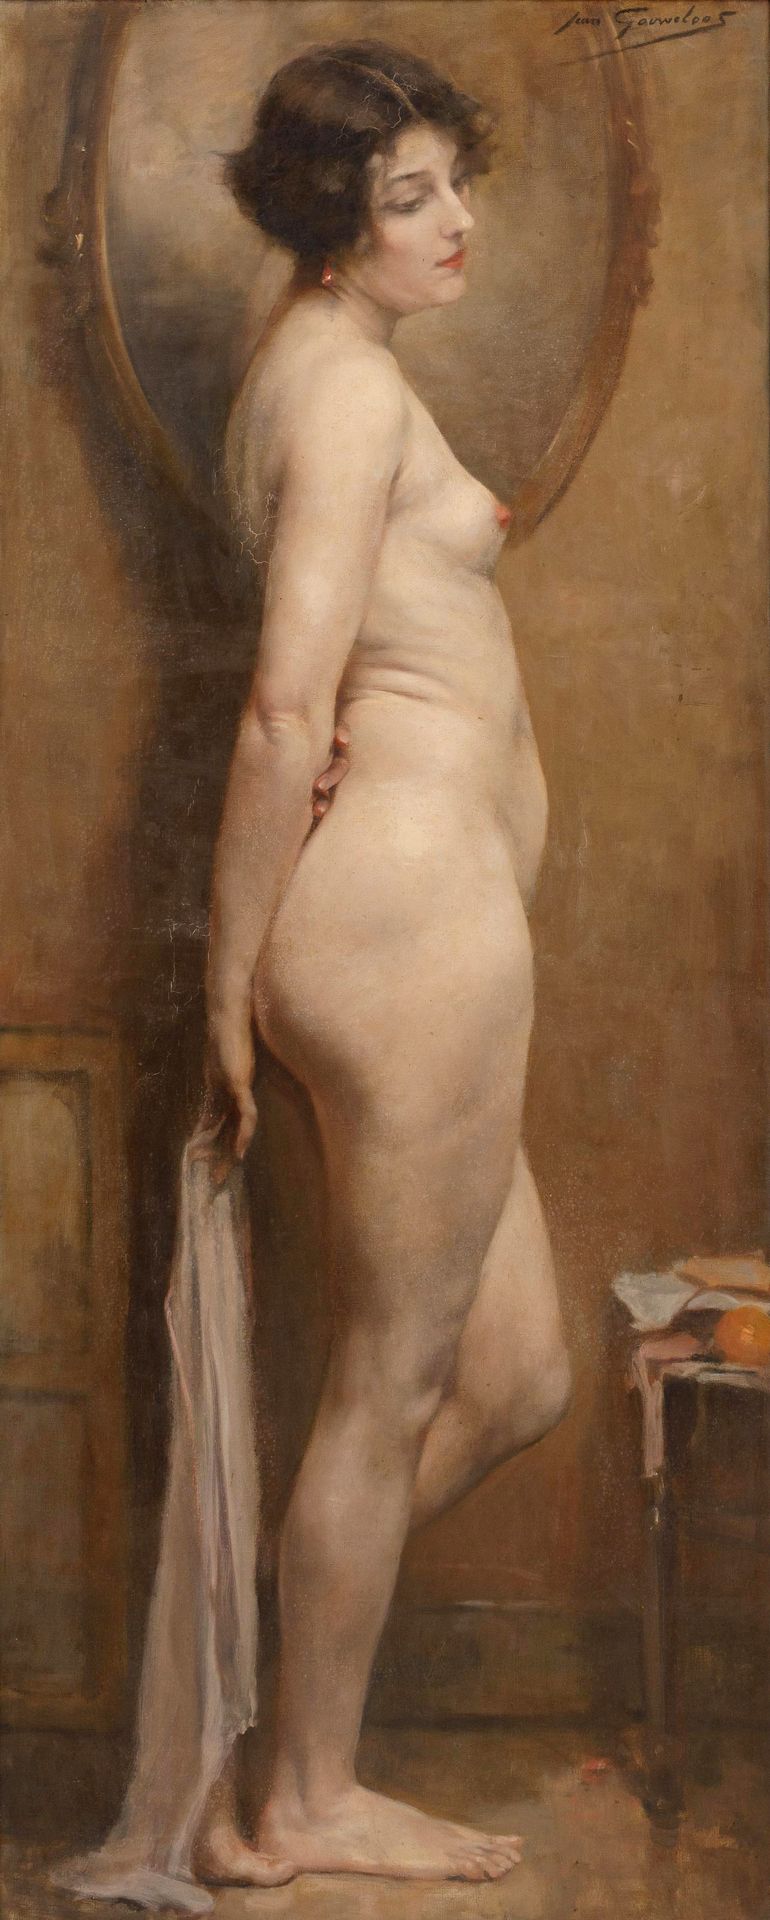 Jean gouweloos (1868-1943) Desnudo, soñando.

De tela. 

Firmado "Jean Gouweloos&hellip;